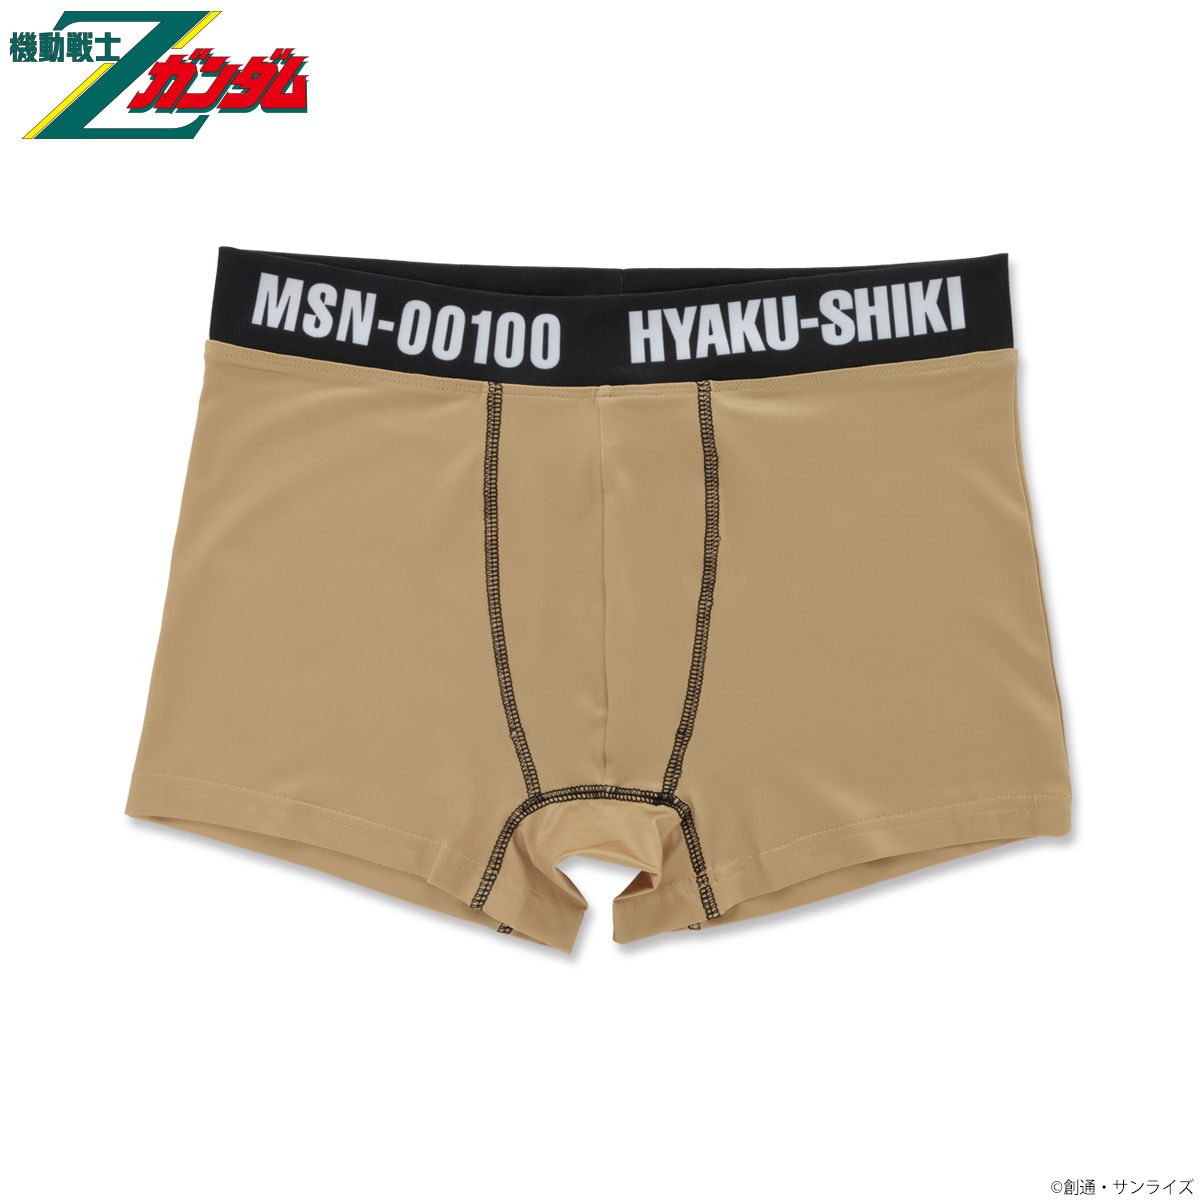 Mobile Suit Zeta Gundam MSN-00100 Boxer Shorts